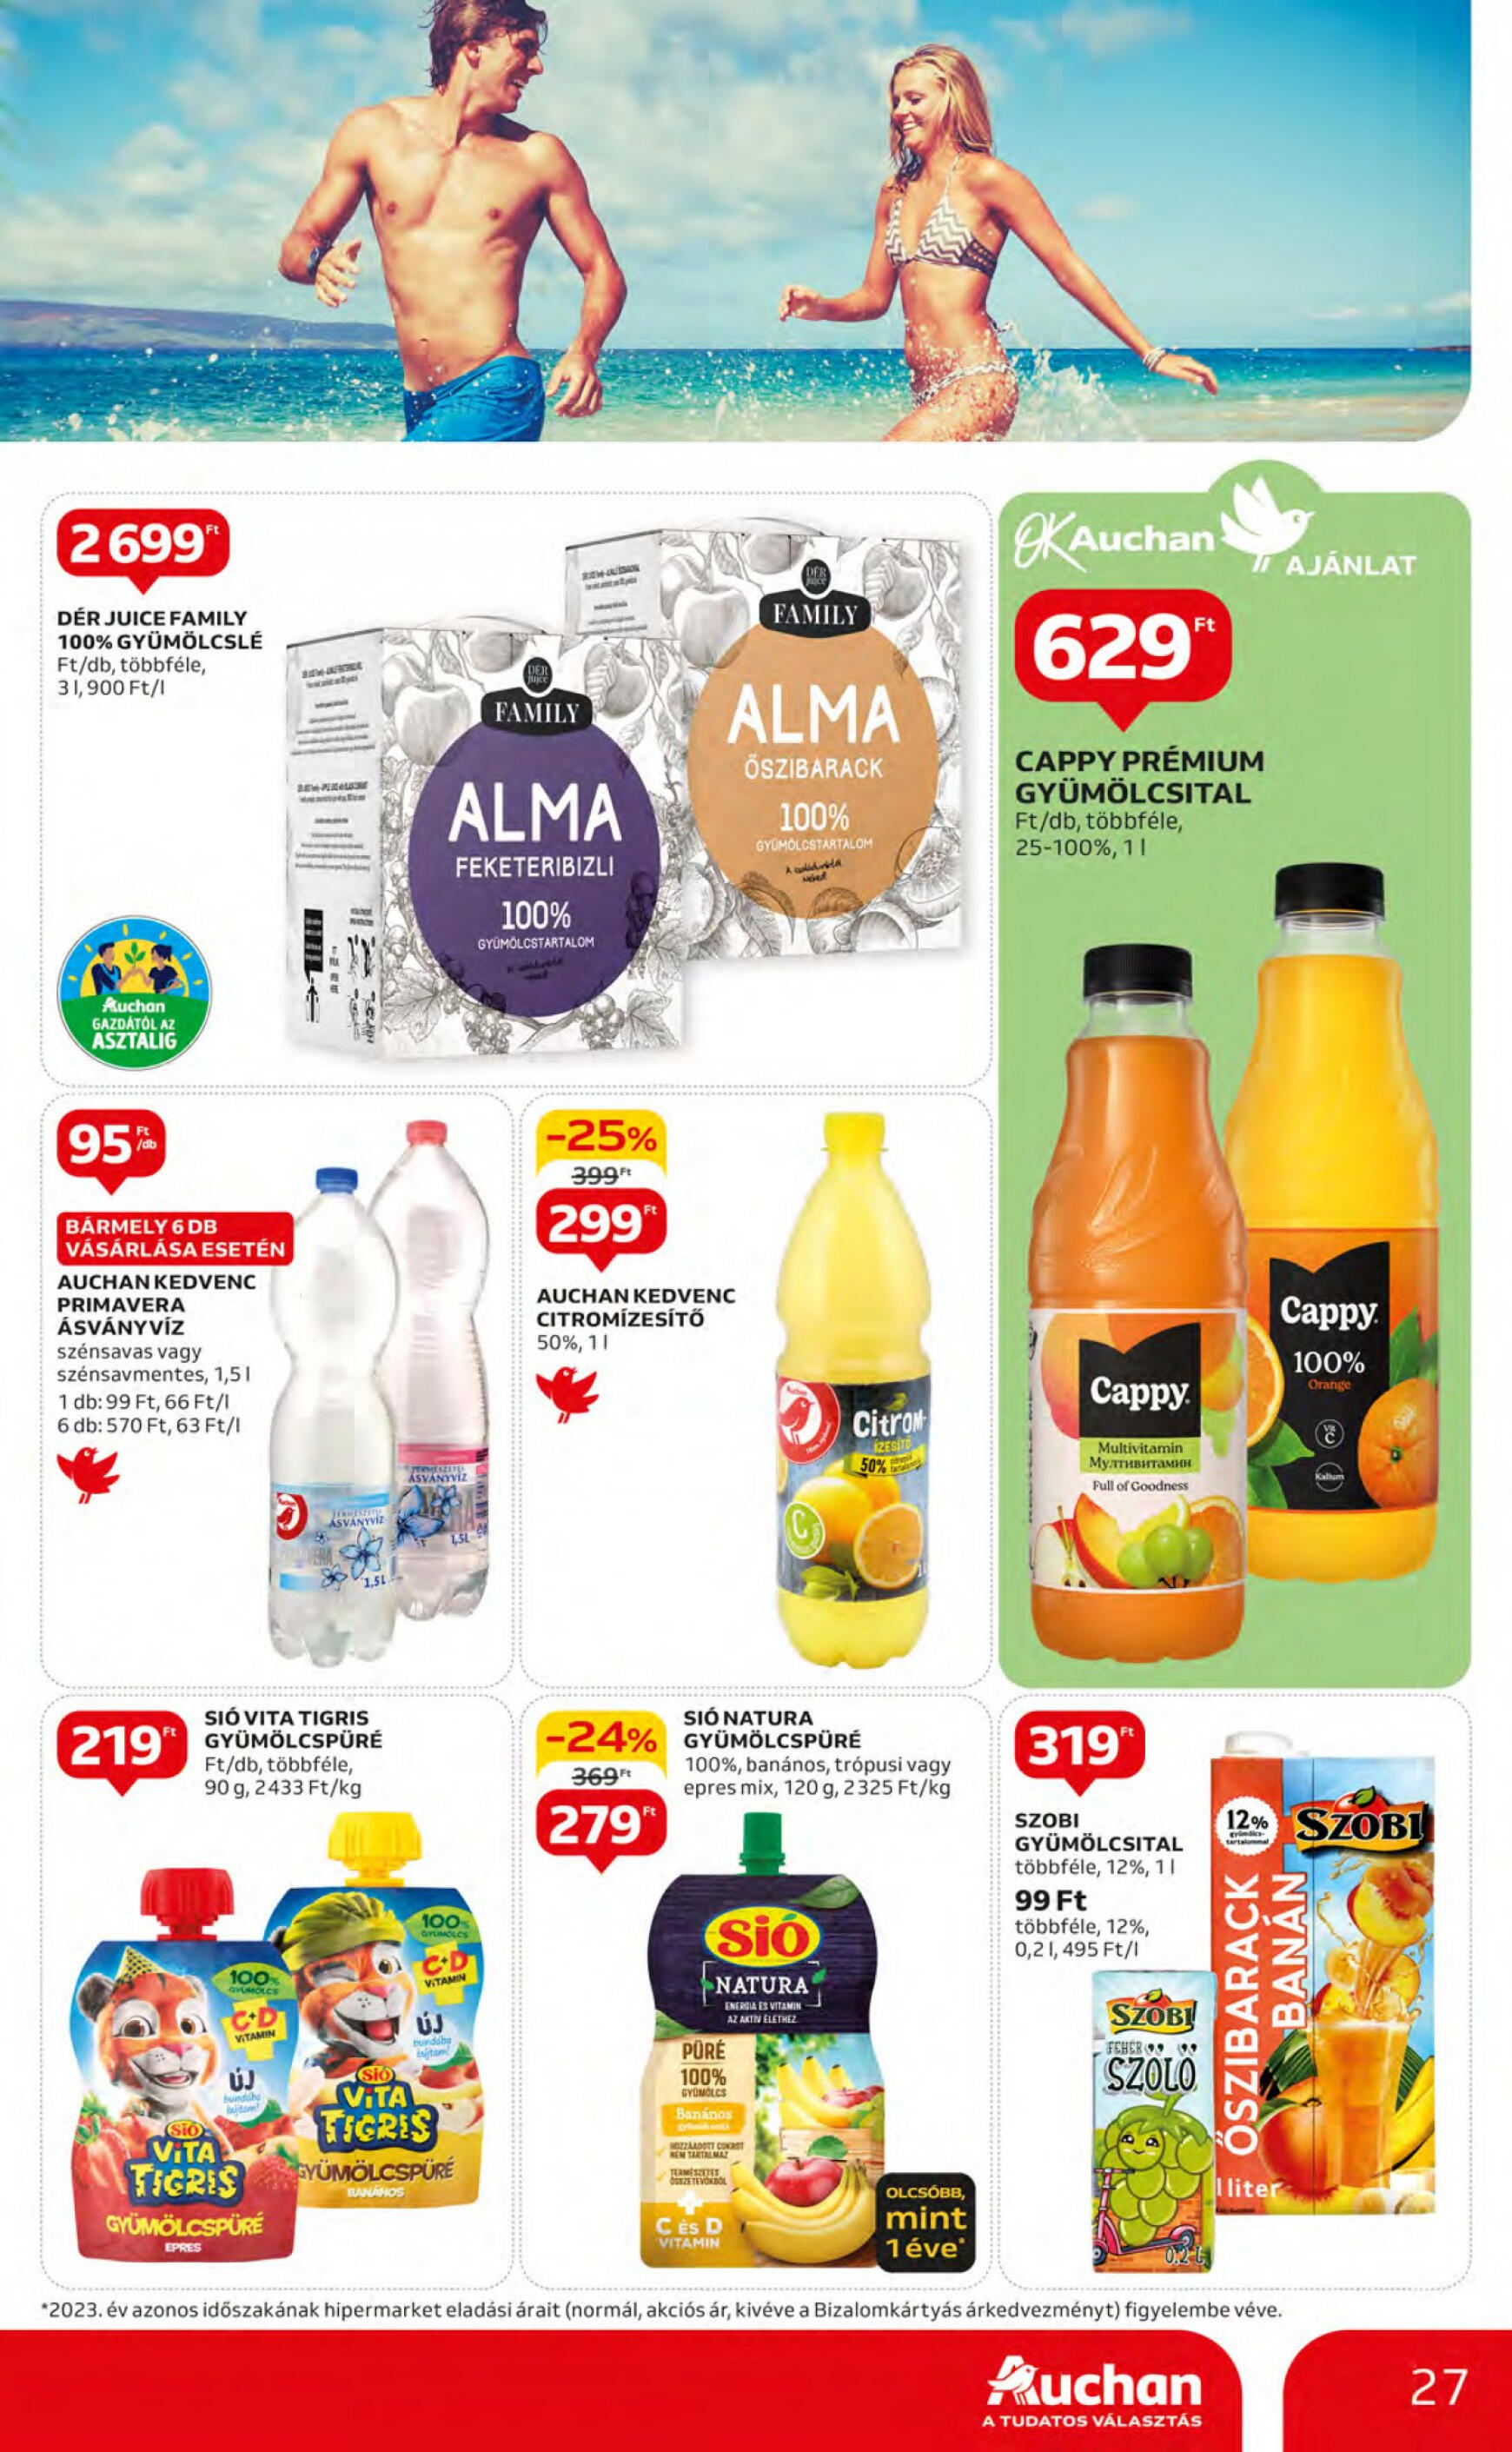 auchan - Aktuális újság Auchan 05.09. - 05.15. - page: 27